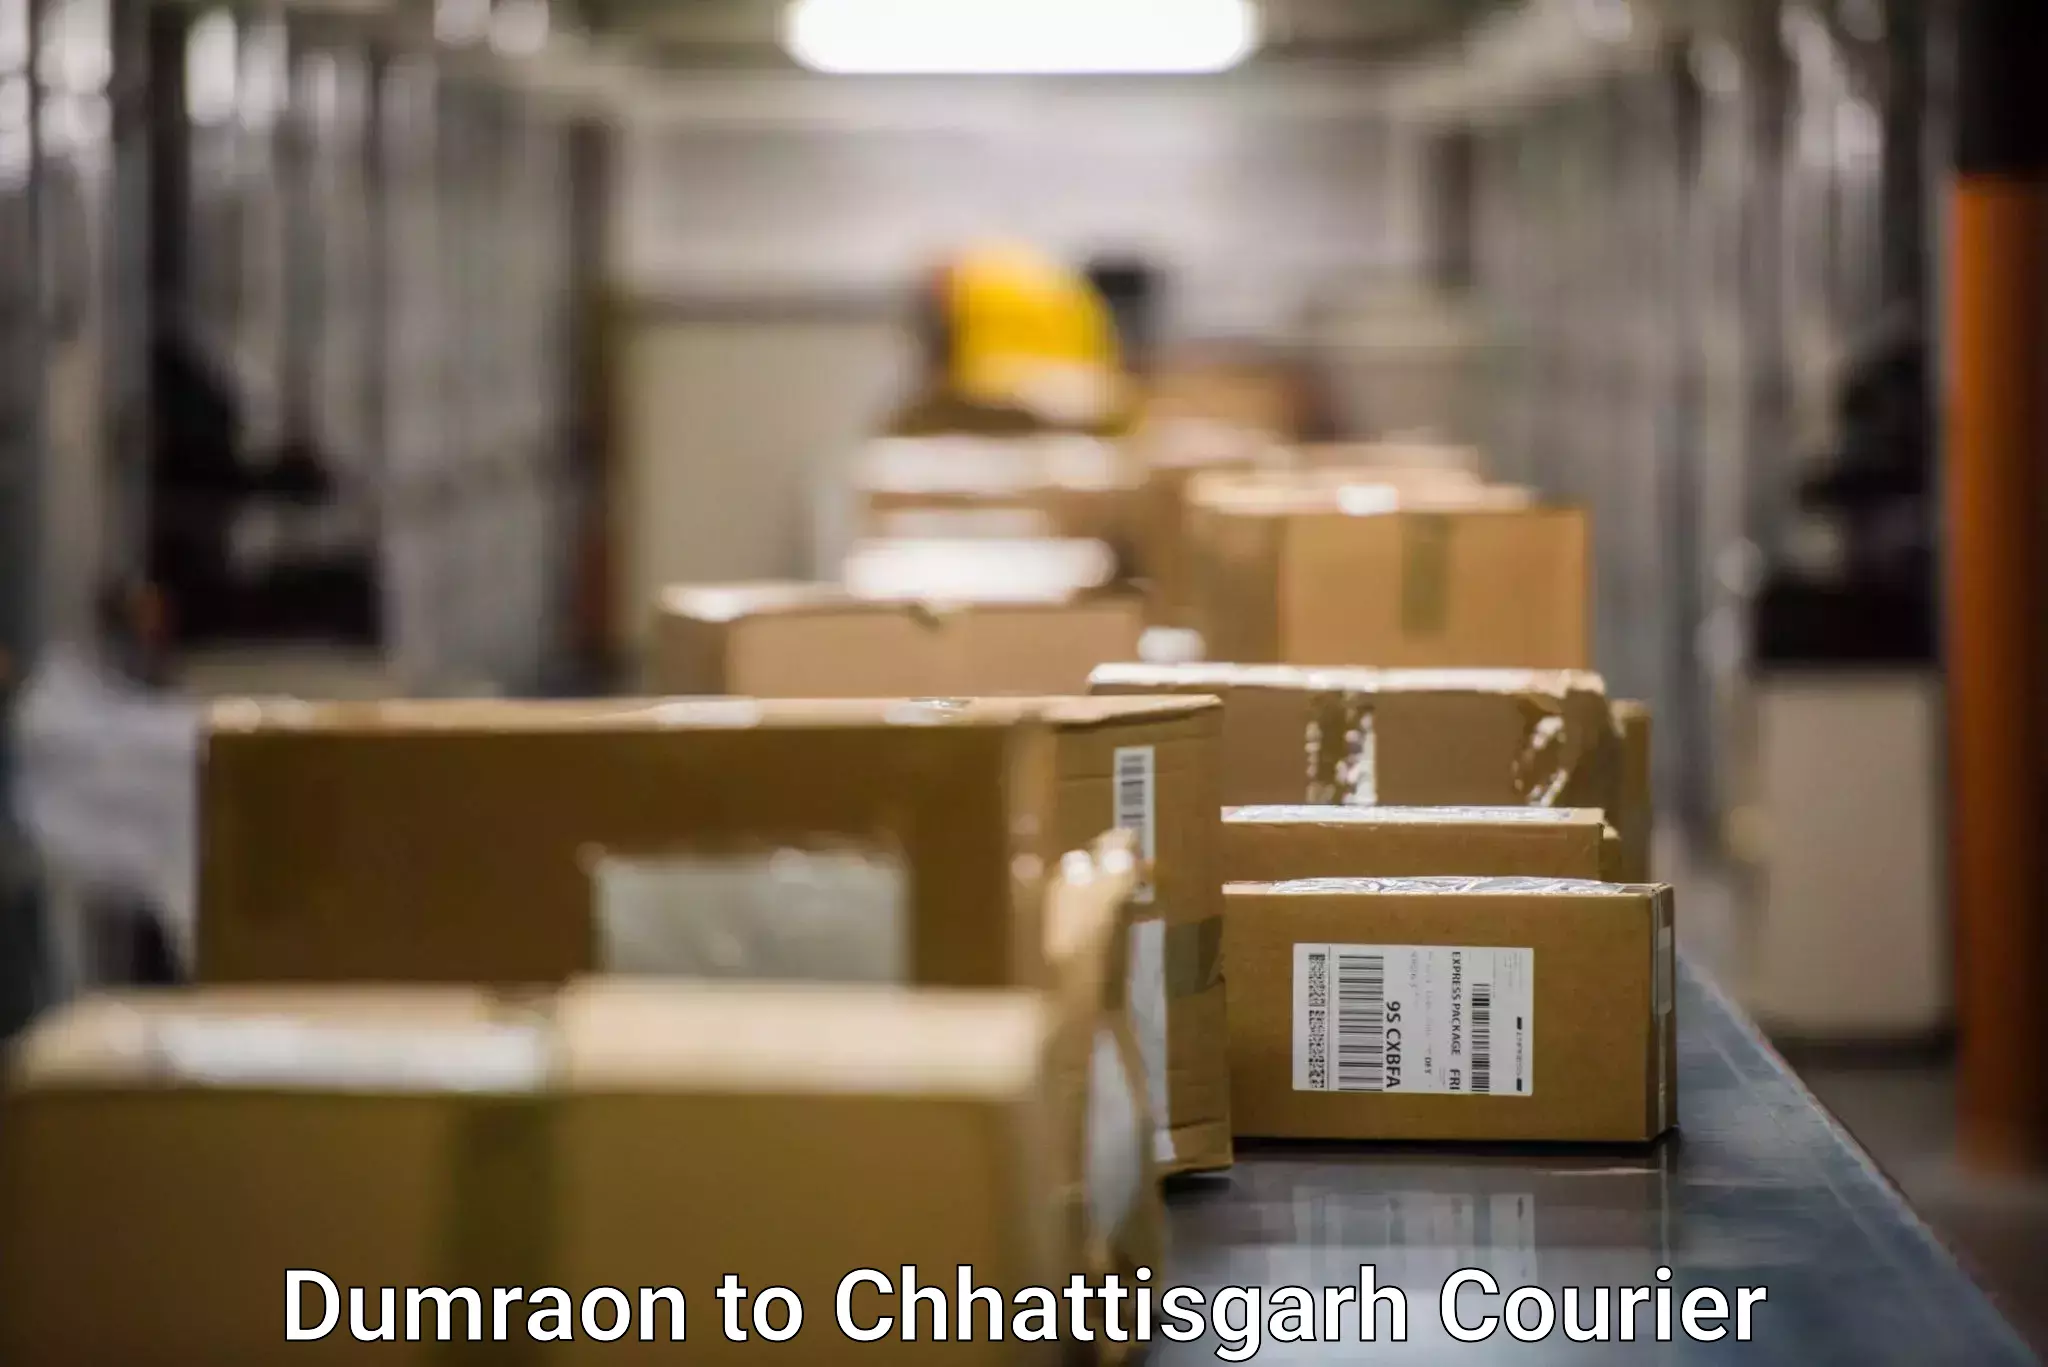 Courier service efficiency Dumraon to Chhattisgarh